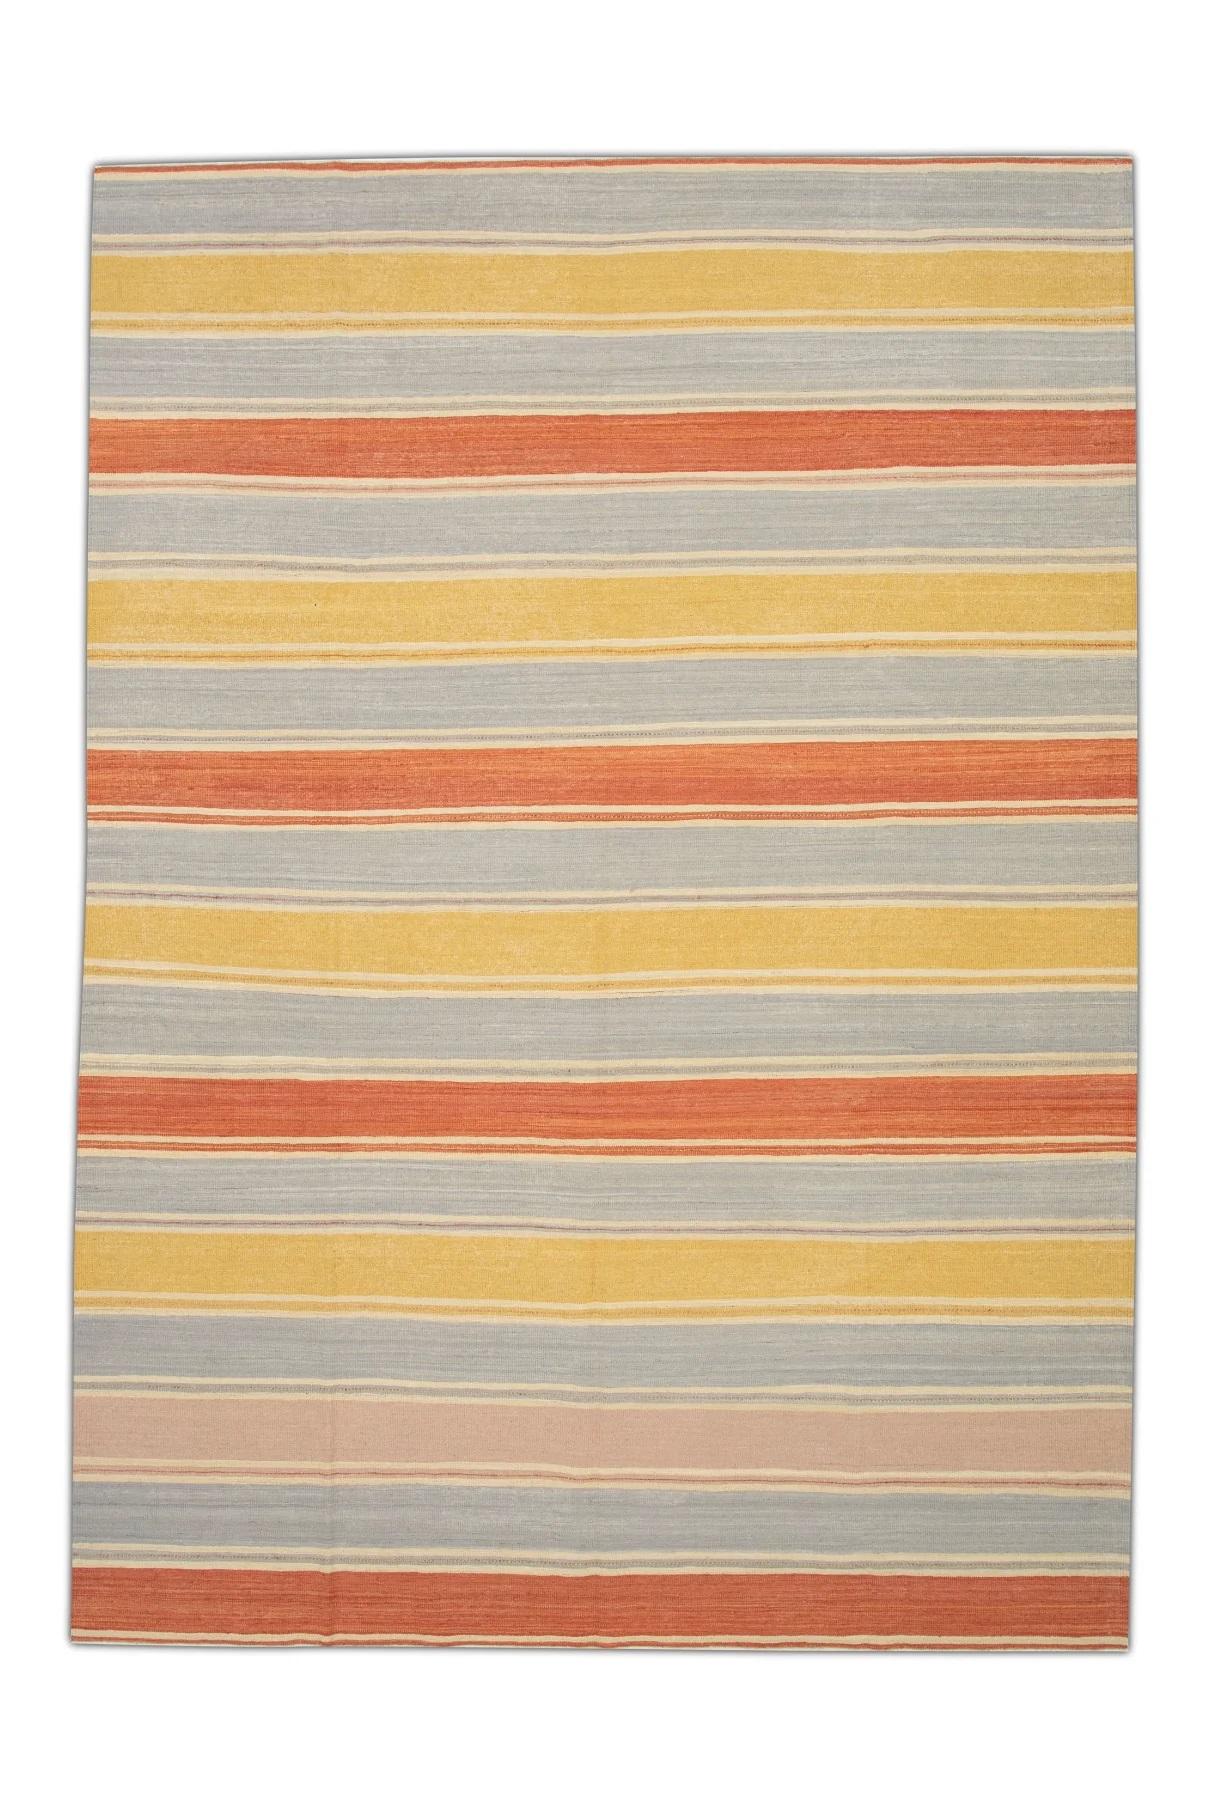 Turkish Red and Yellow Stripe Design Flatweave Handmade Wool Rug 8'10